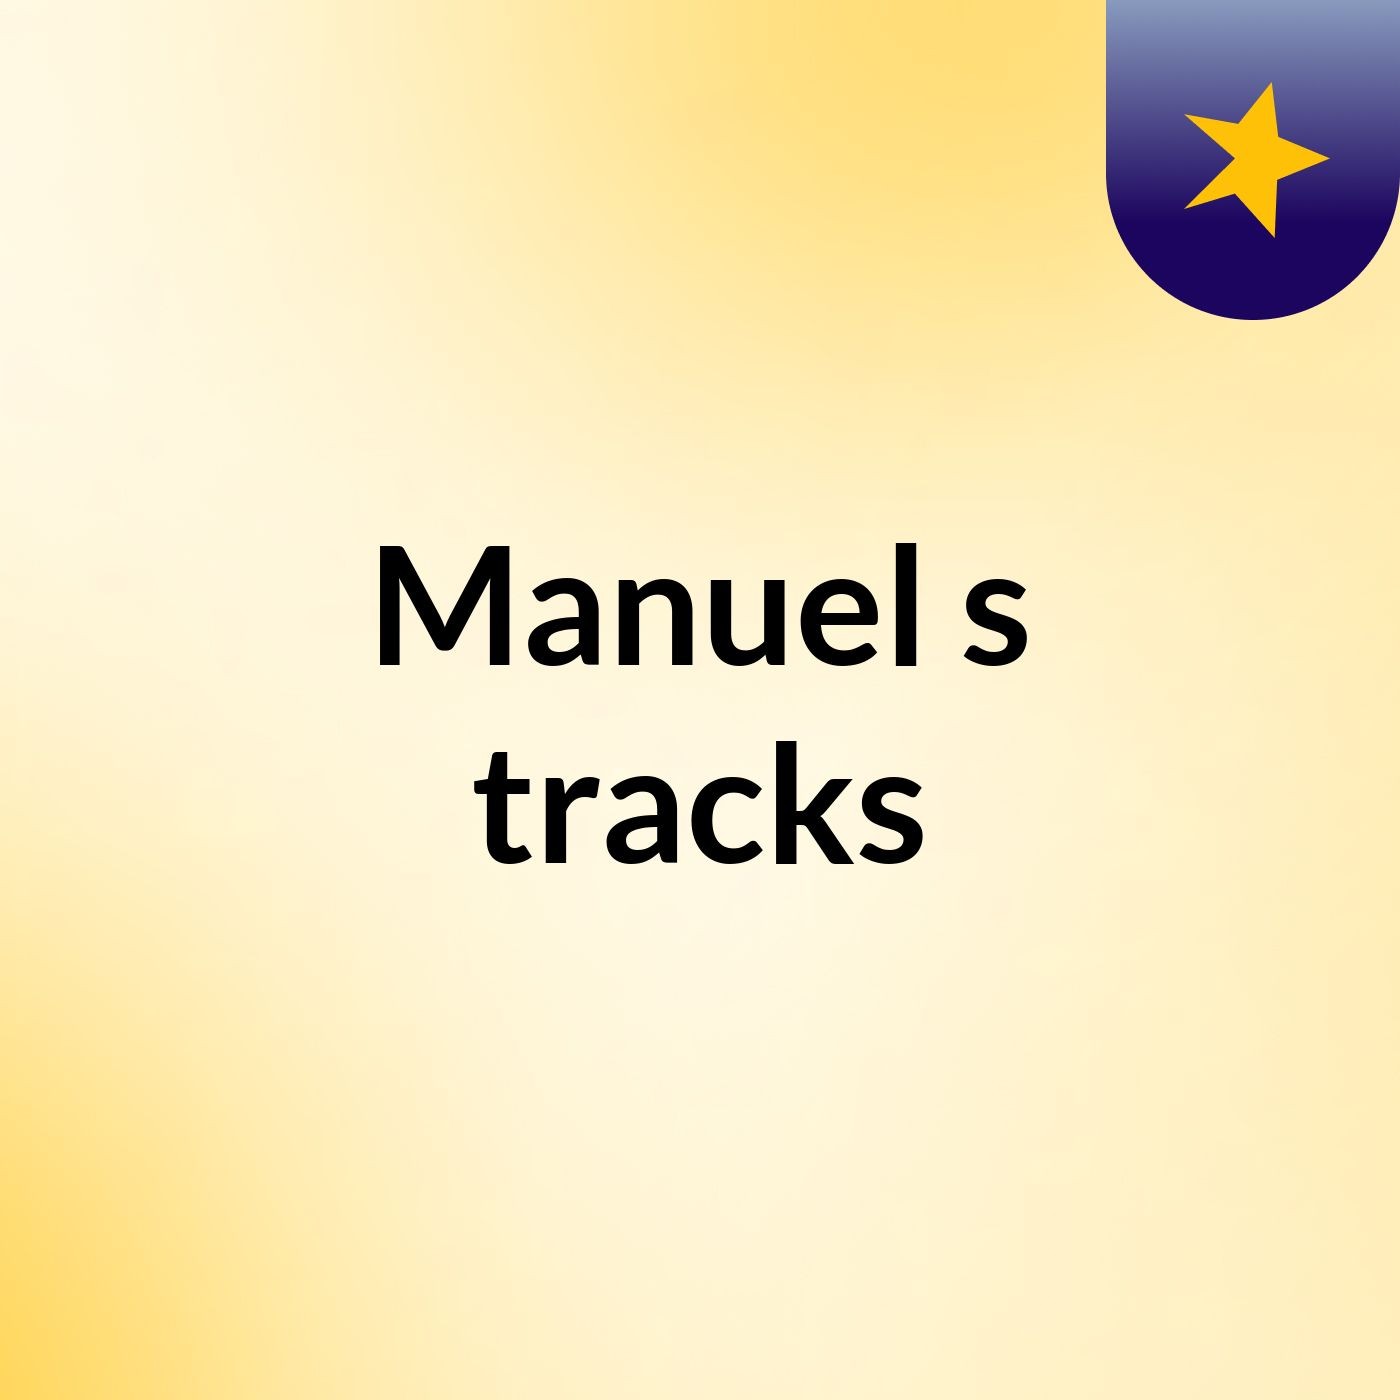 Manuel's tracks